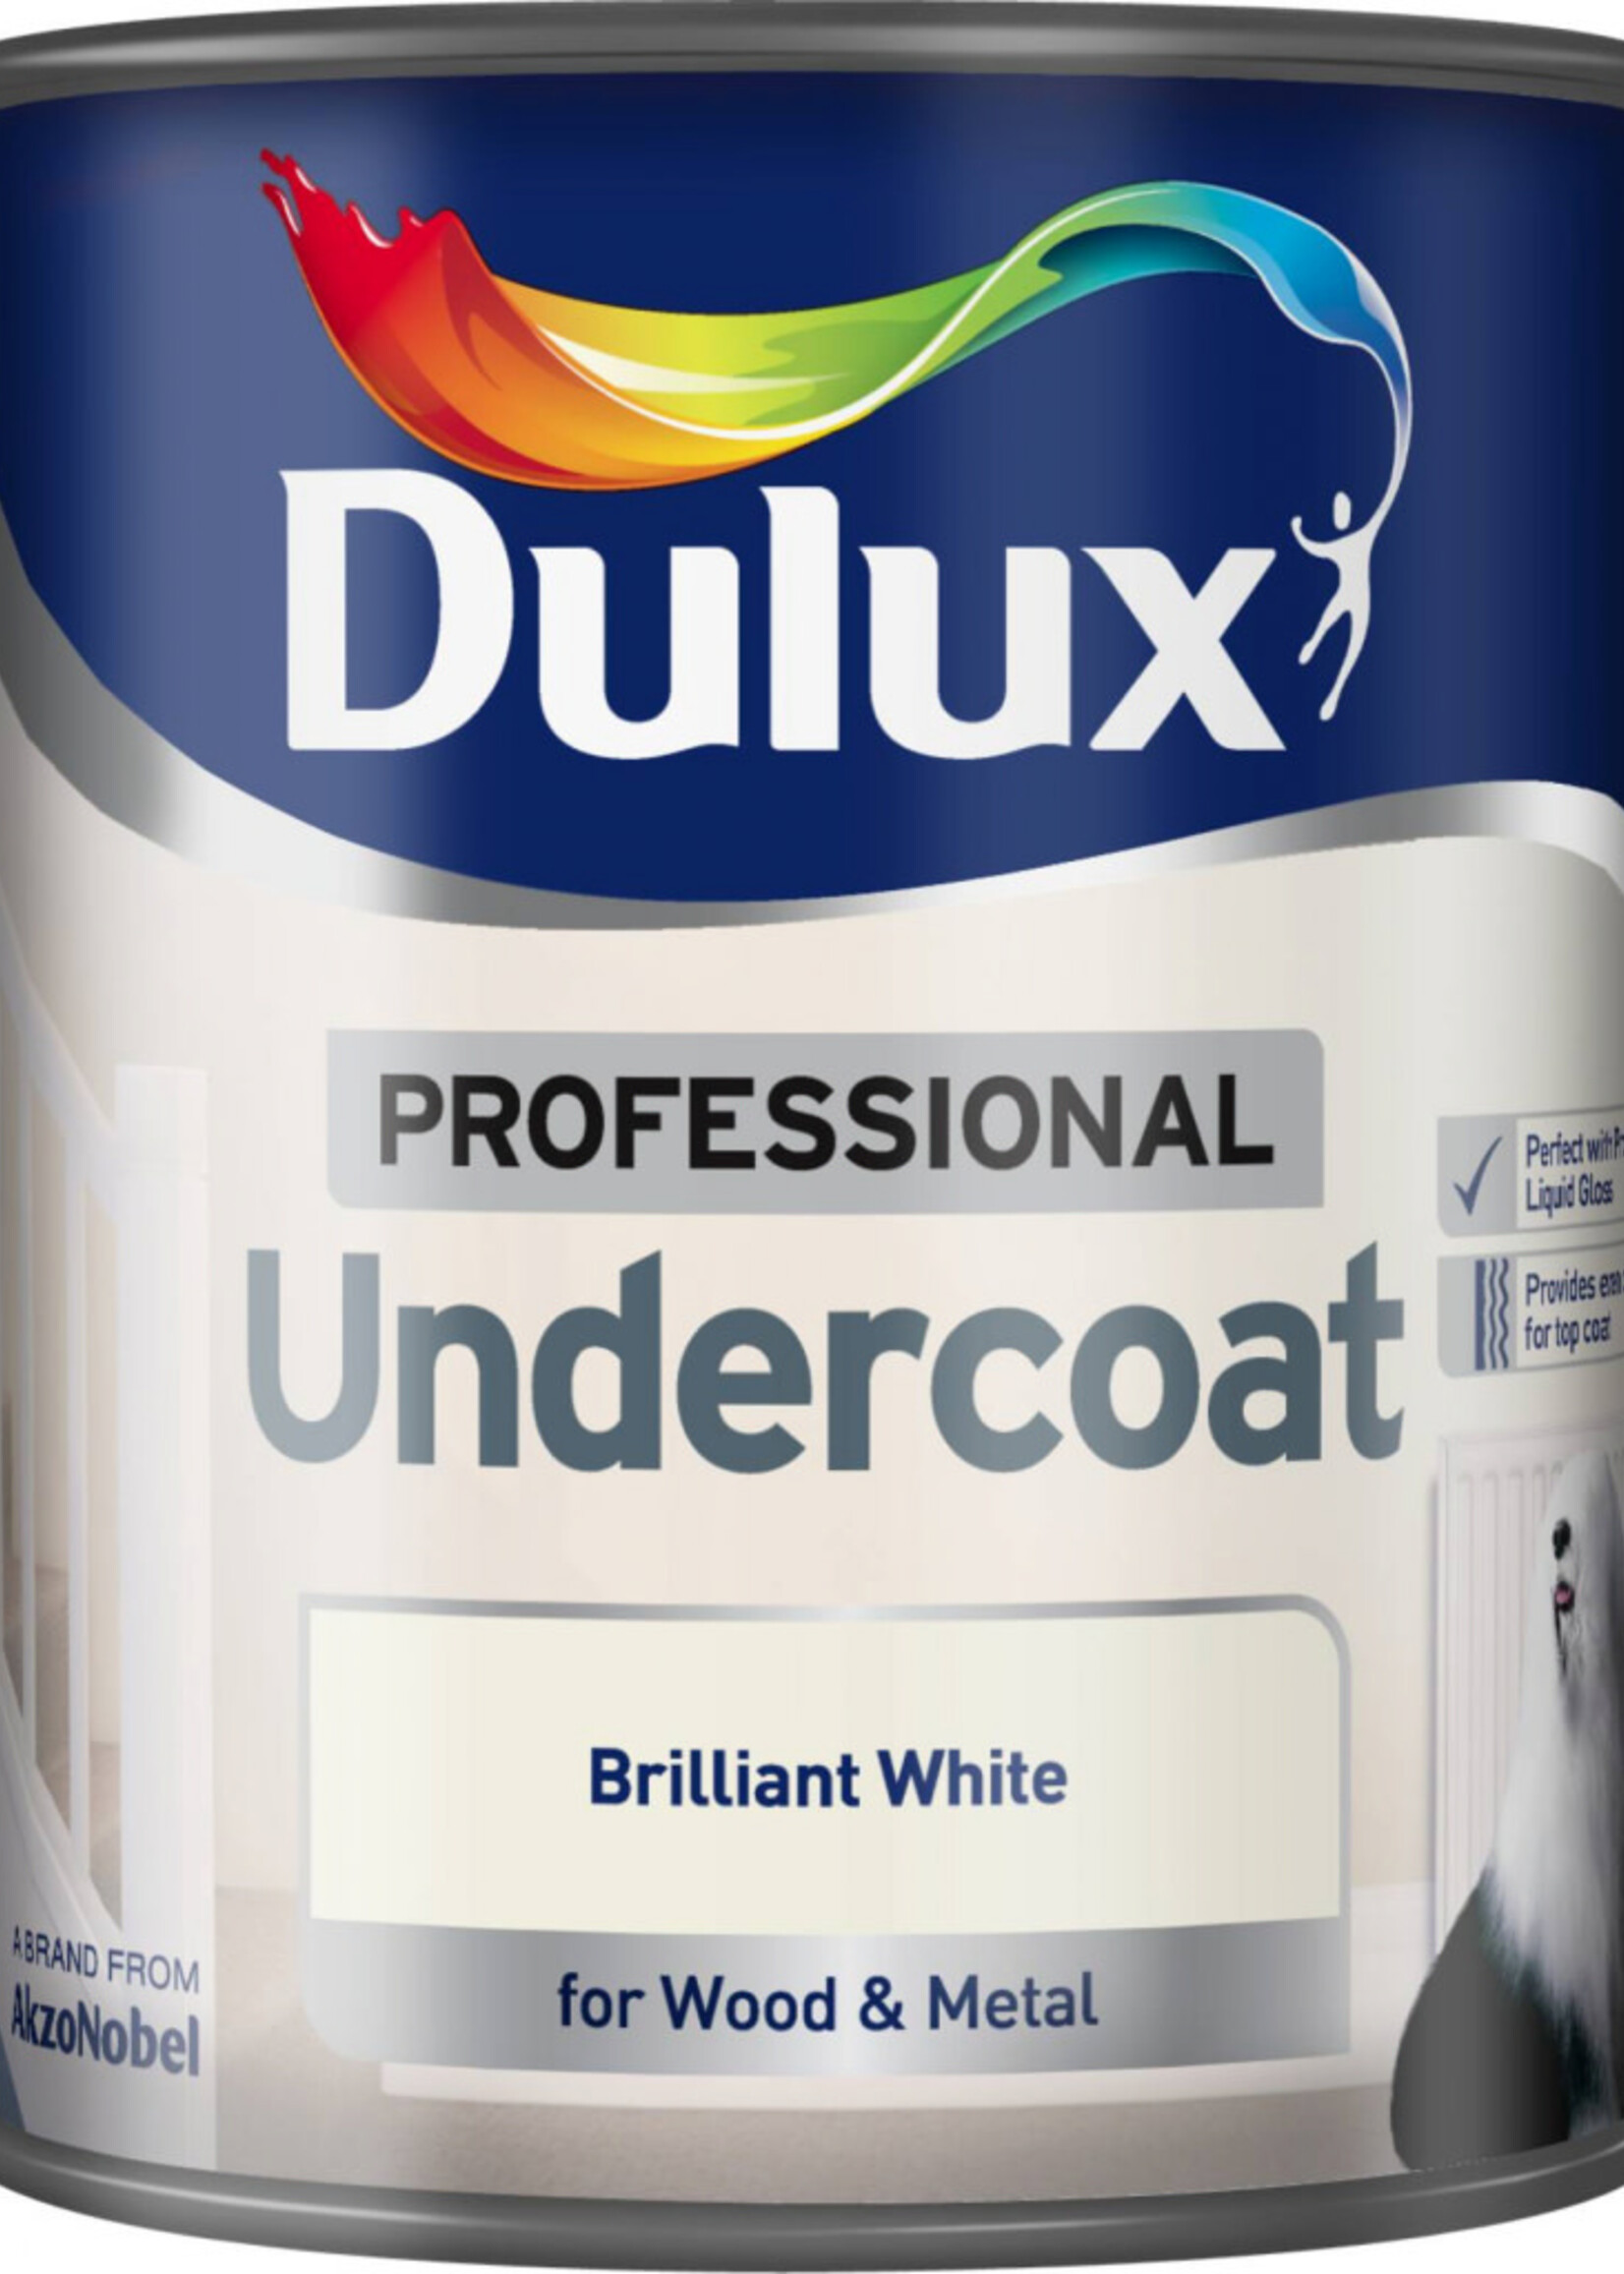 Dulux (Akzo Nobel) Dulux Pure Brilliant White (PBW) 750ml Professional Undercoat